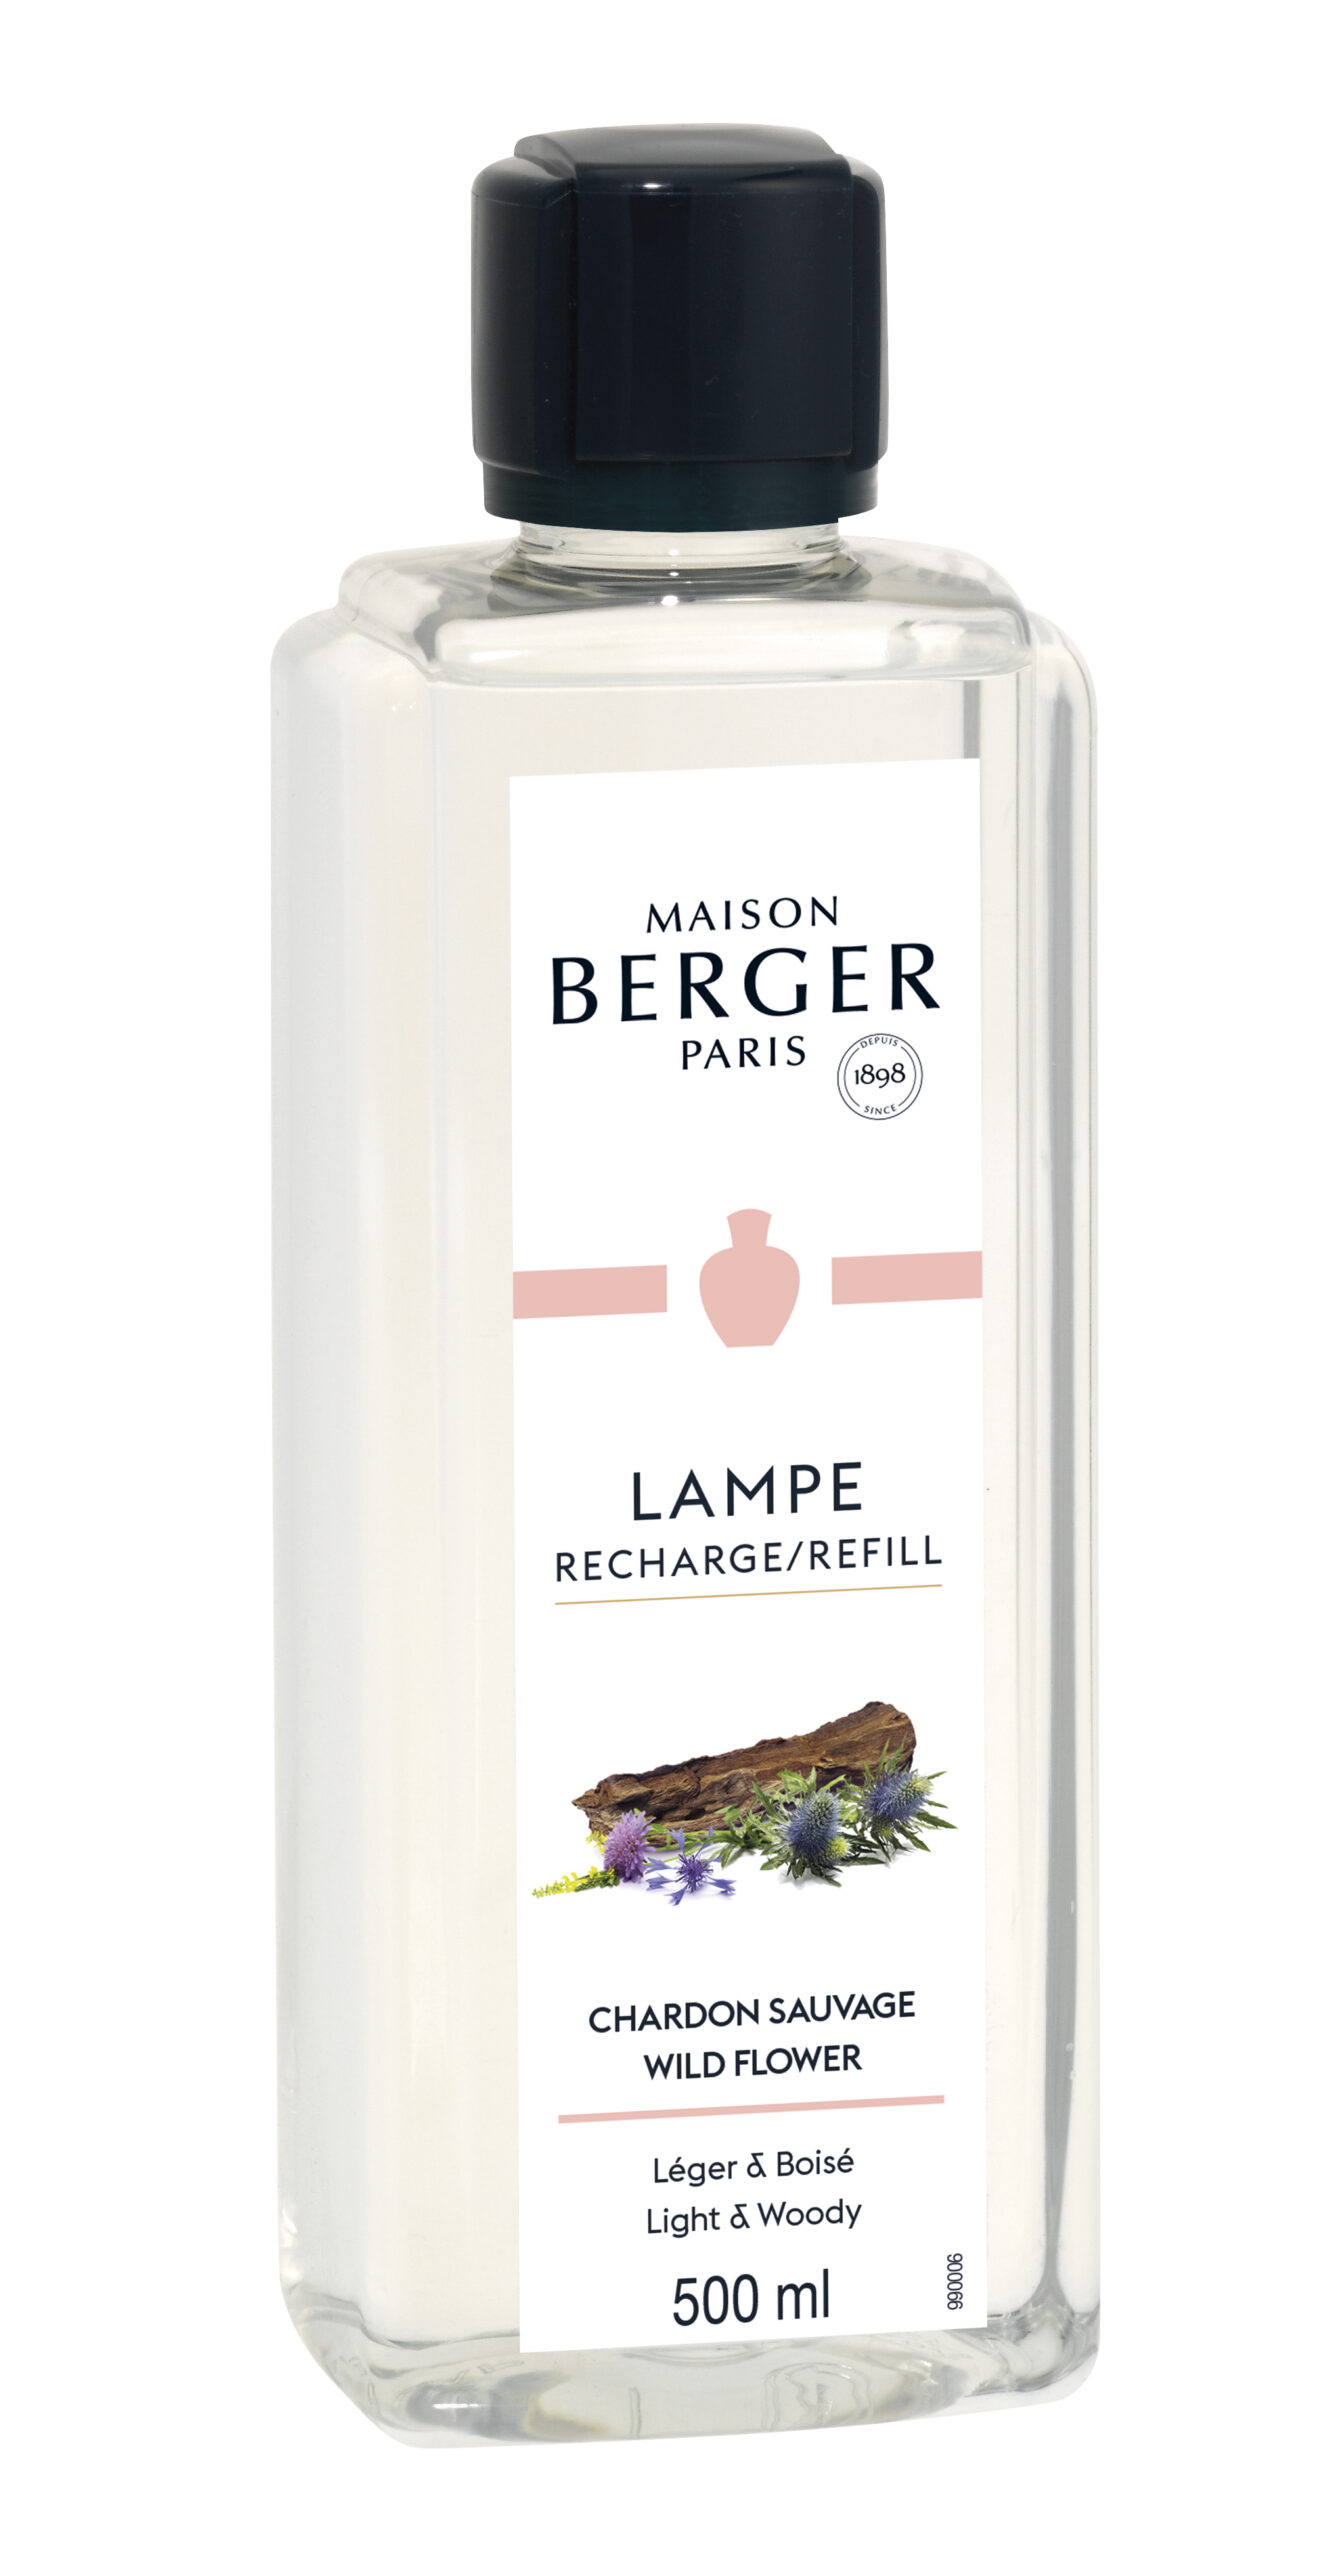 Maison Berger Paris - Parfum Wild Flower - 500 ml